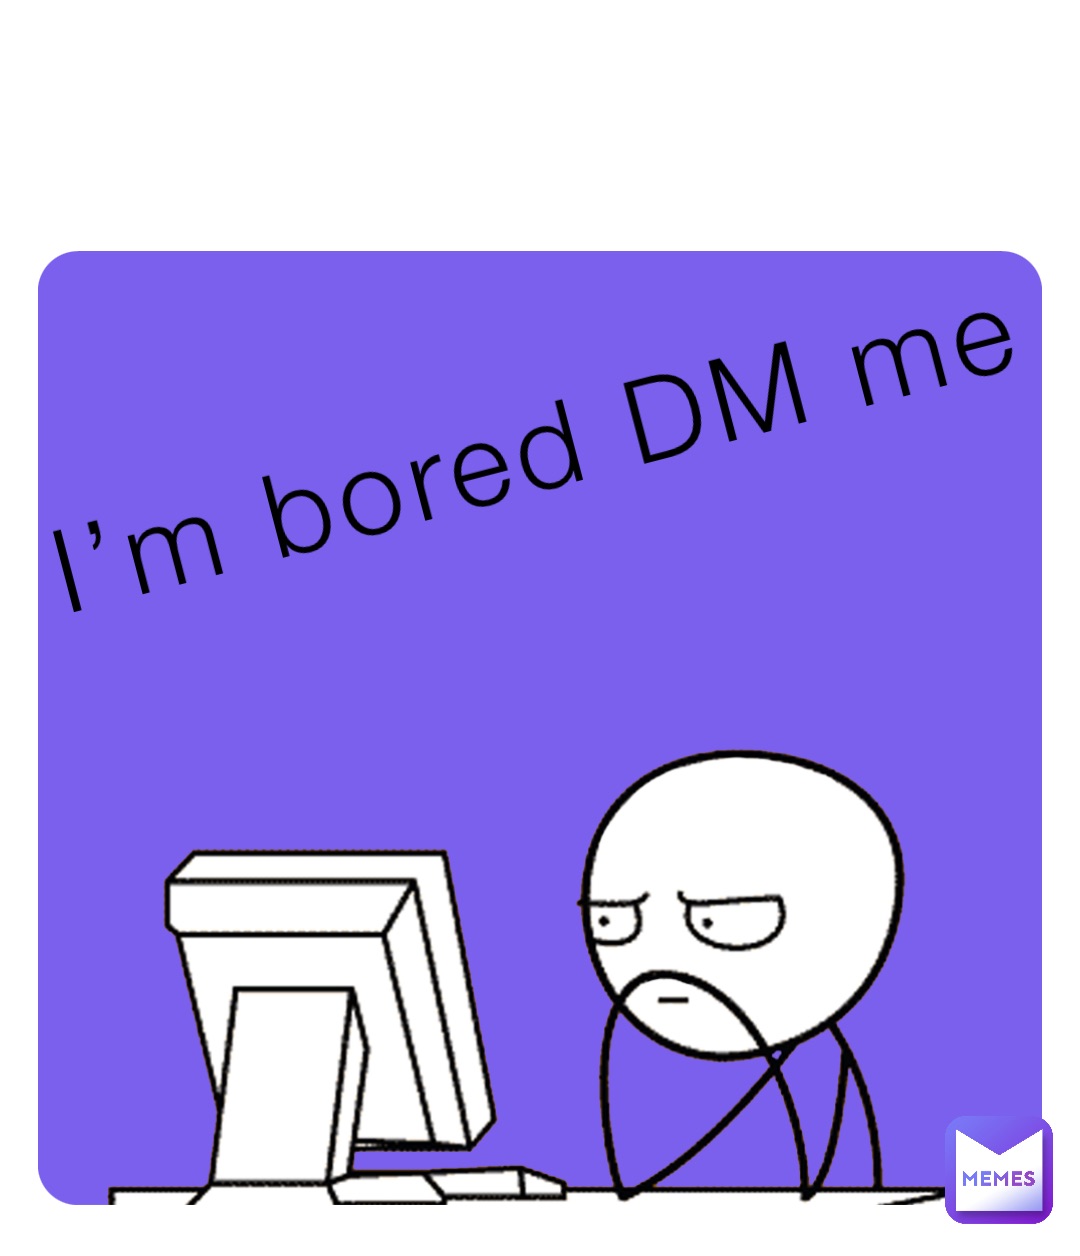 I’m bored DM me